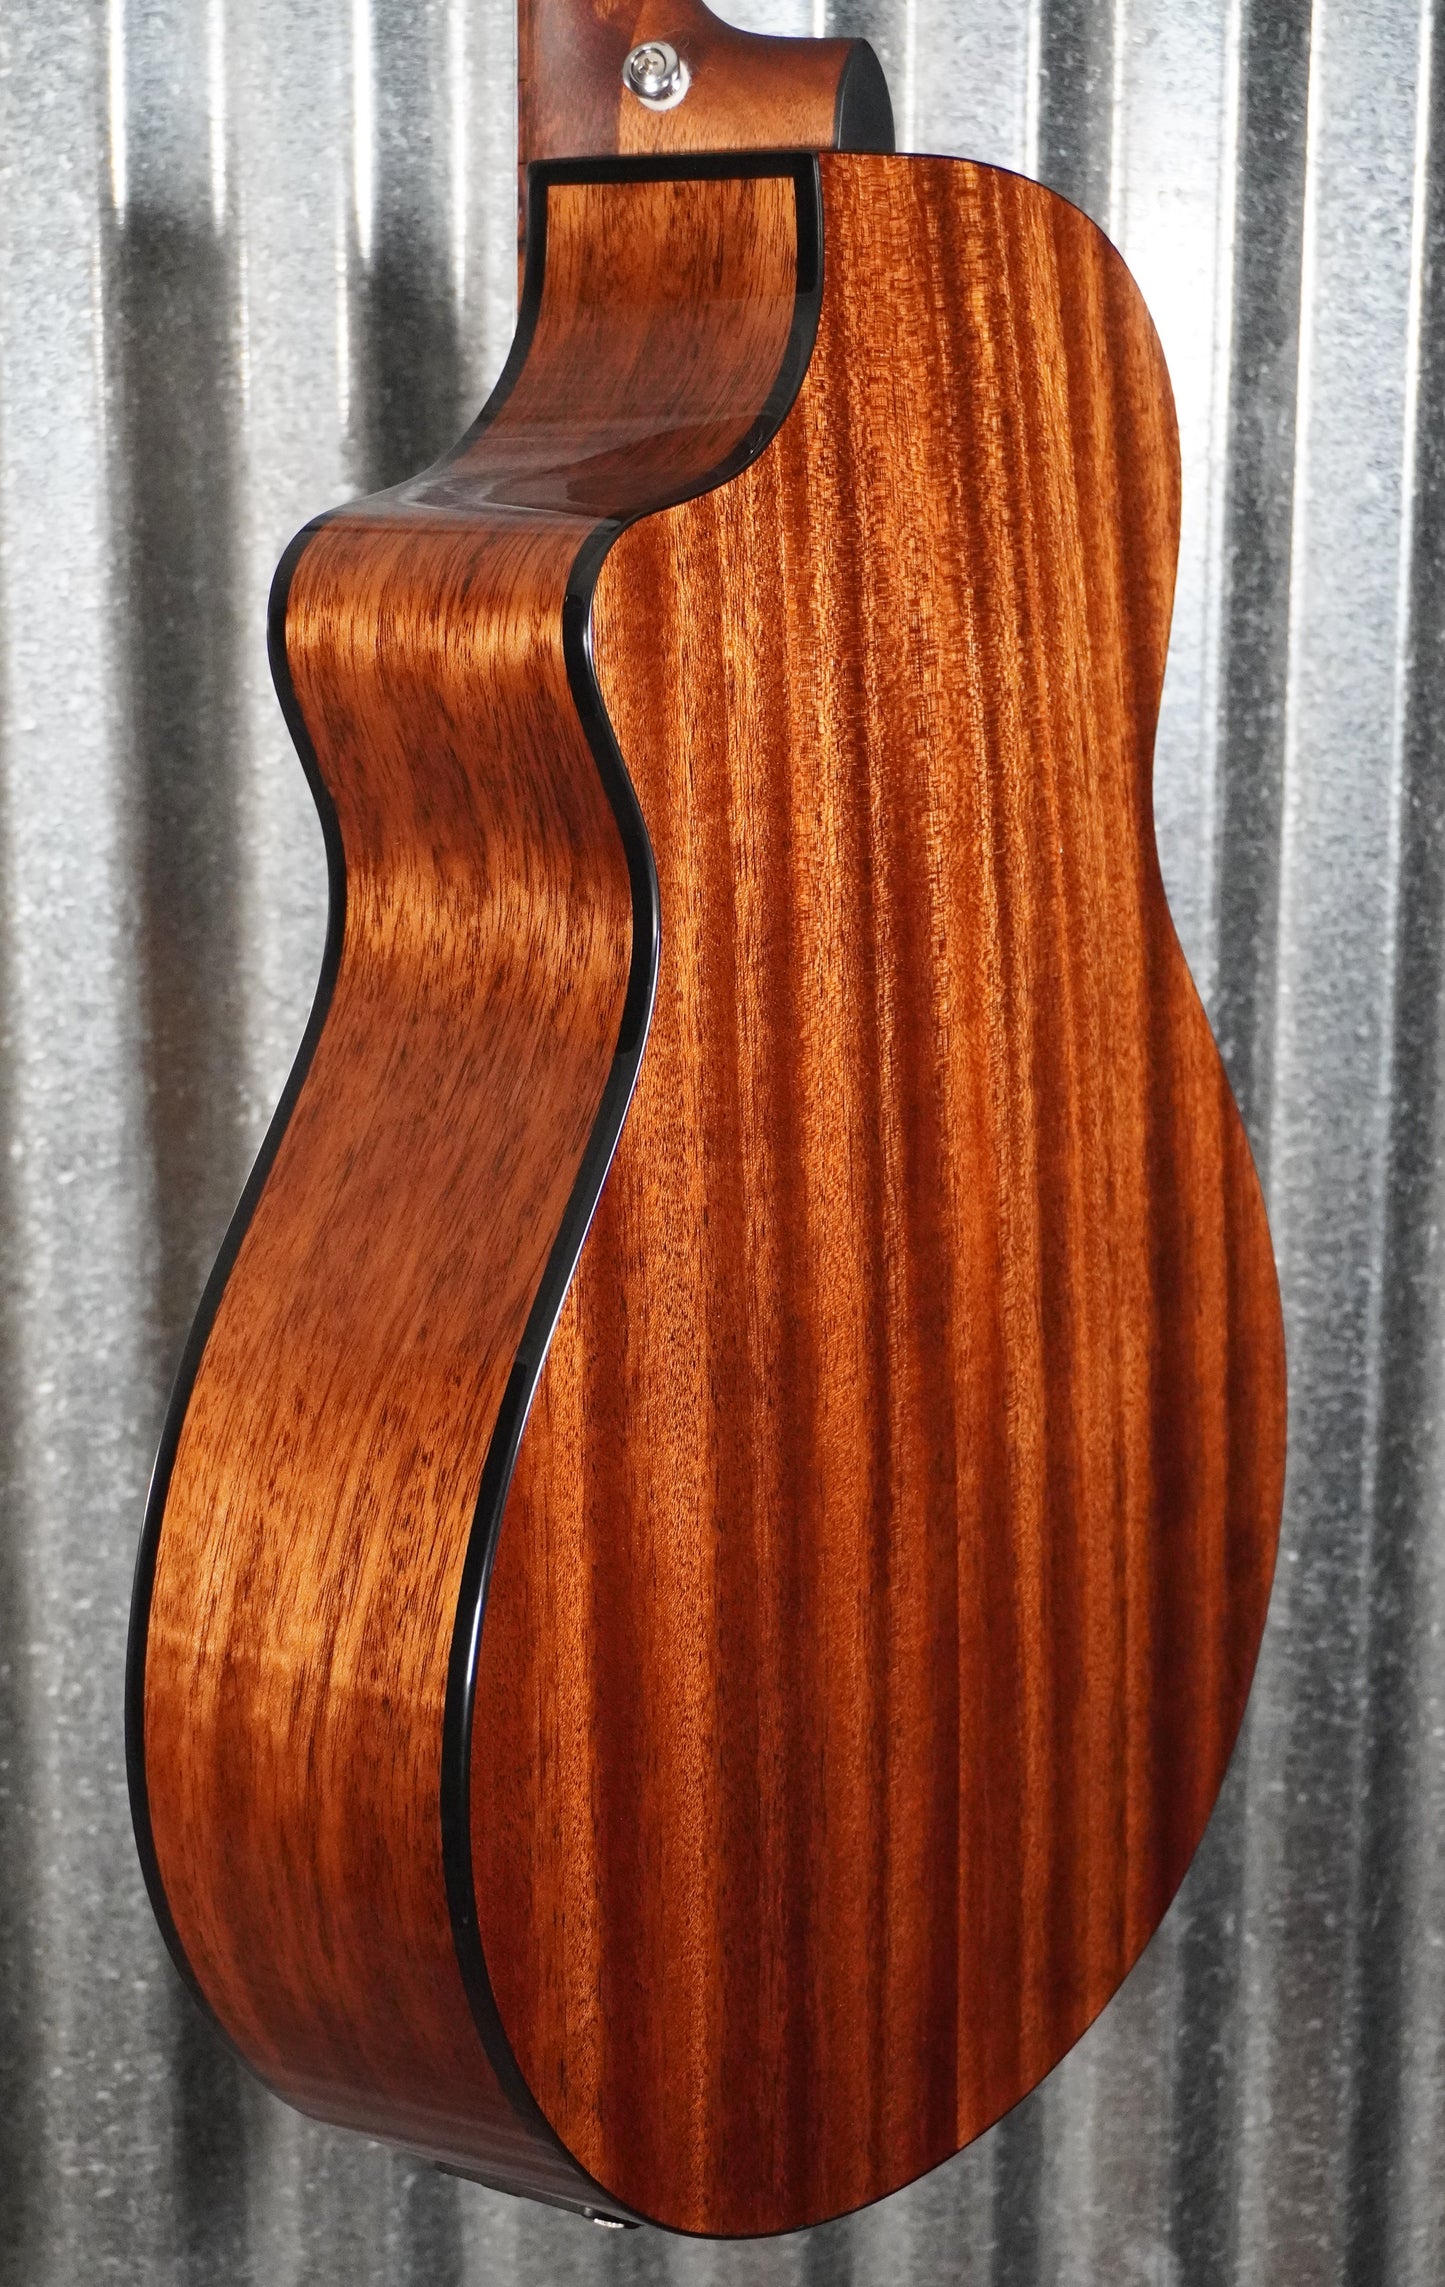 Breedlove Discovery S Concertina Edgeburst CE Red Cedar Acoustic Electric Guitar #9844